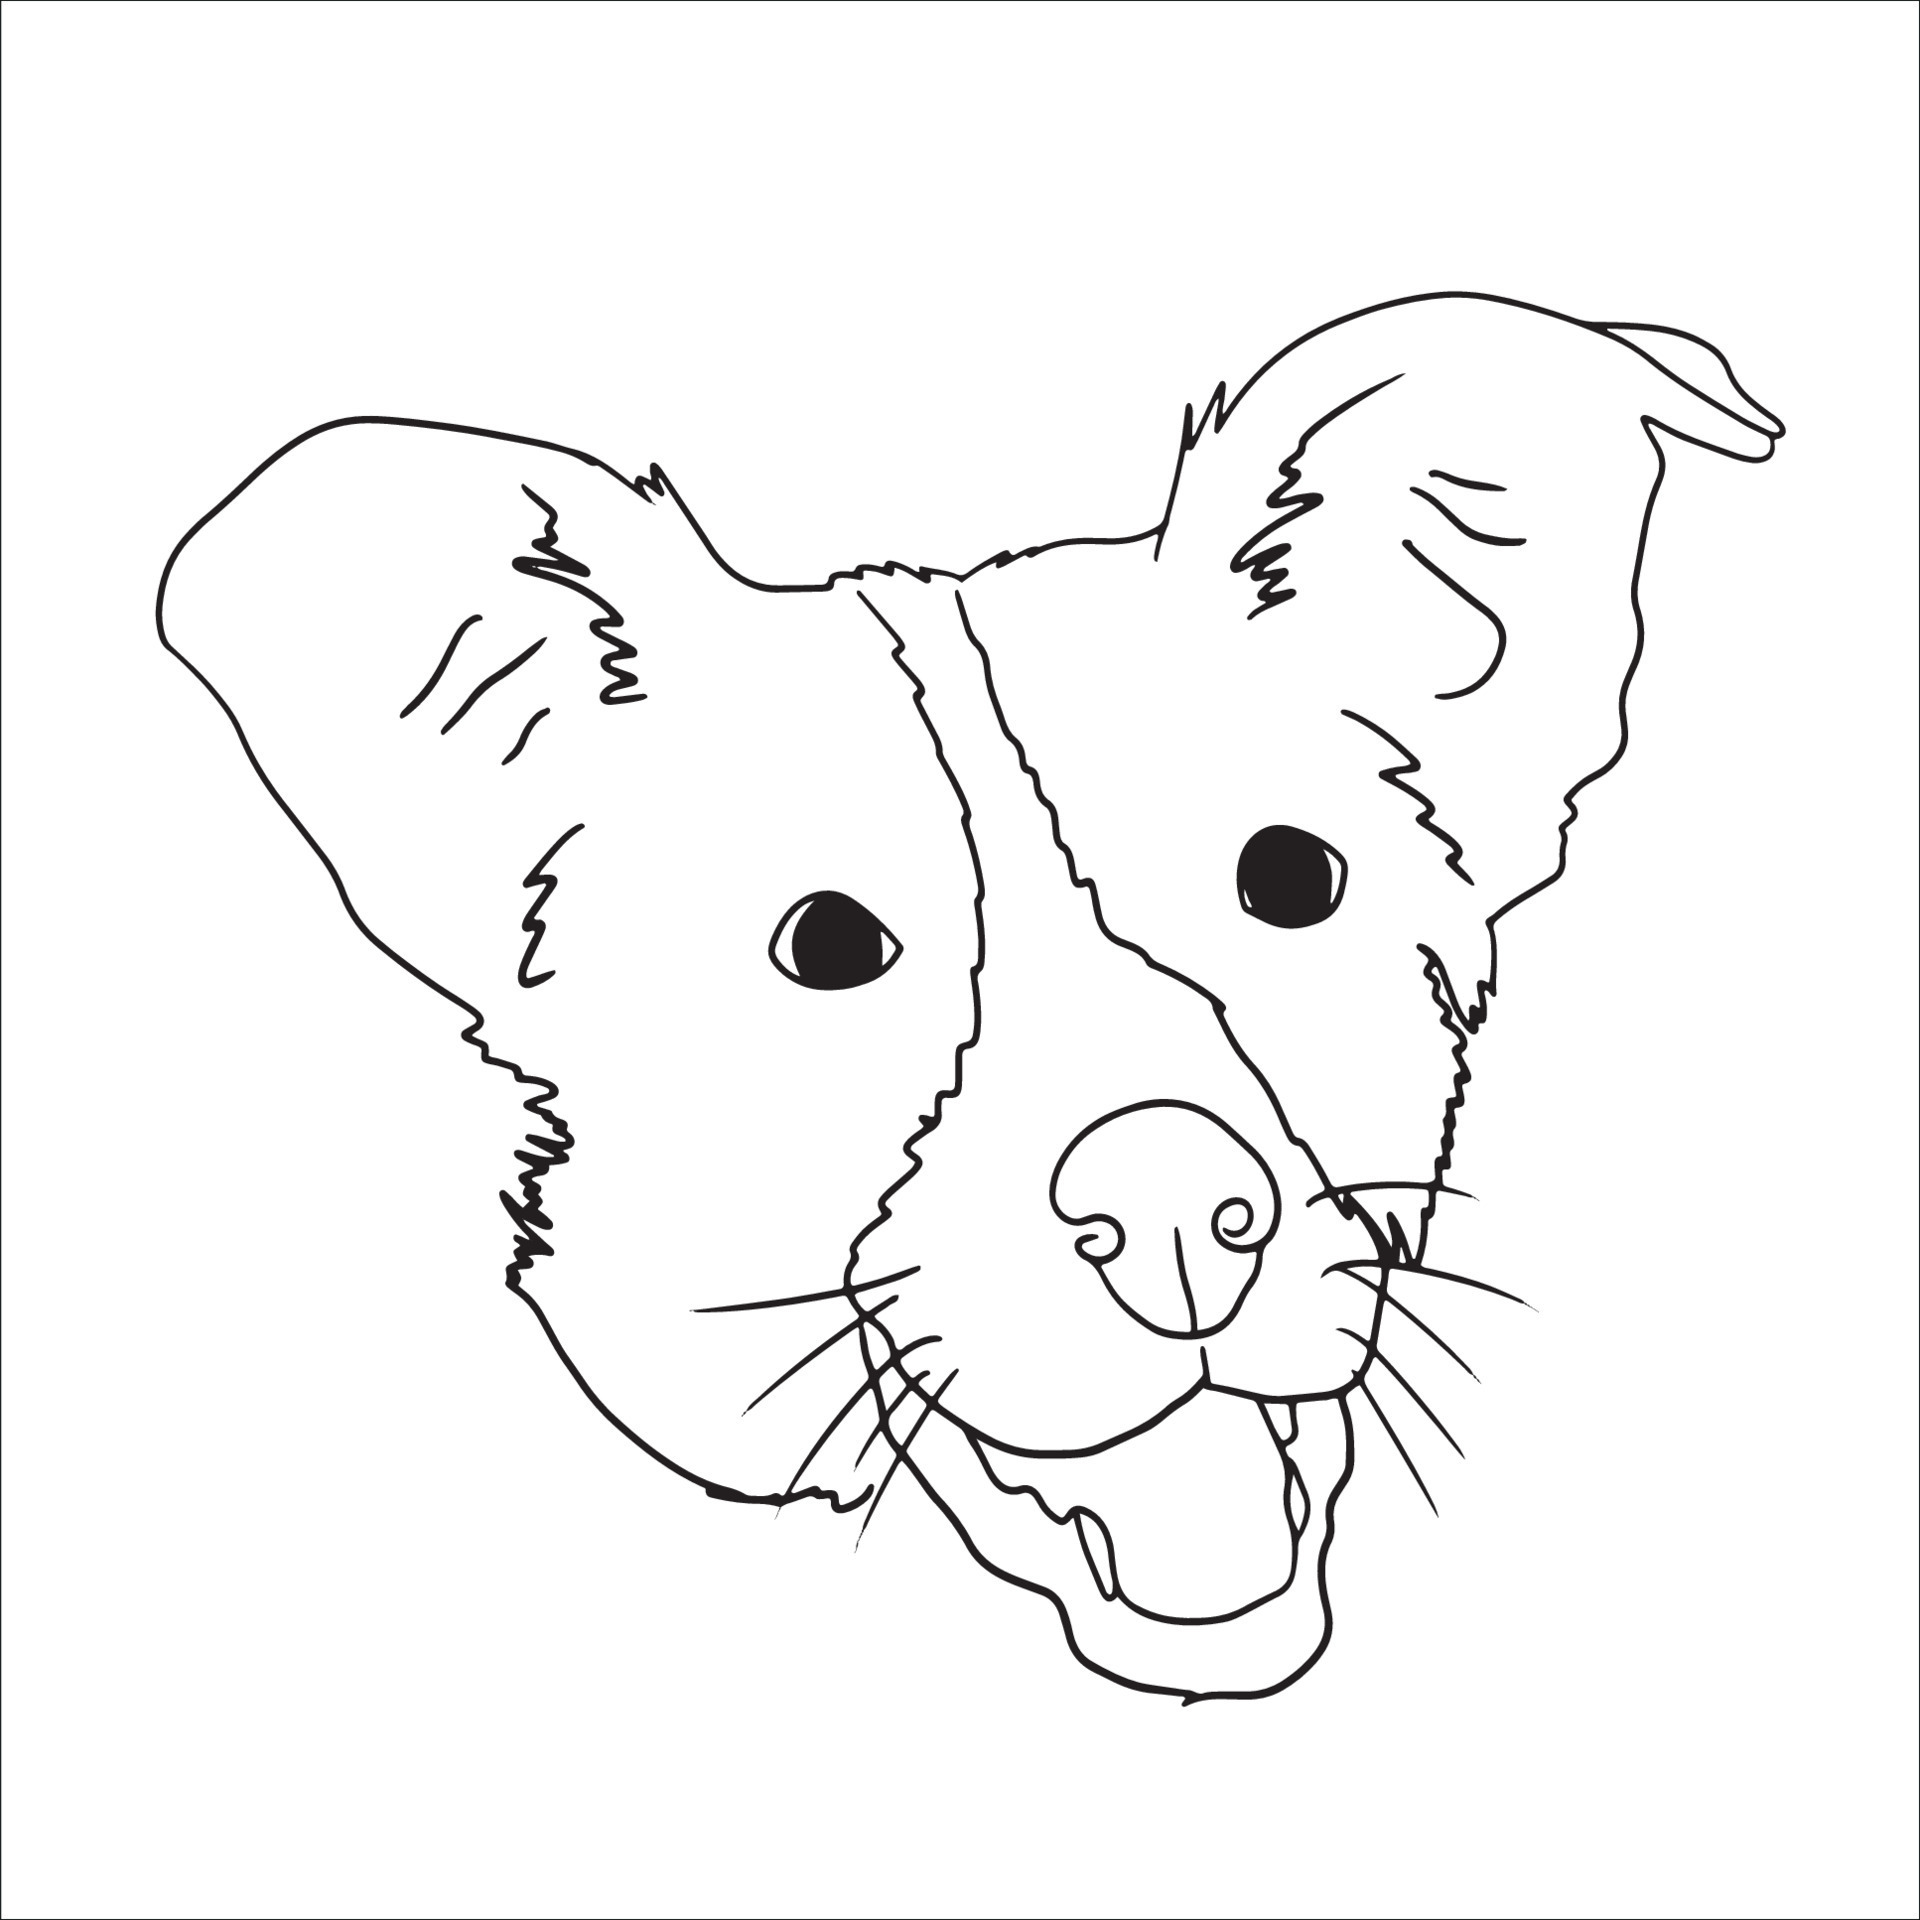 30 Cute Animal Drawings  Easy Animal Drawing Ideas